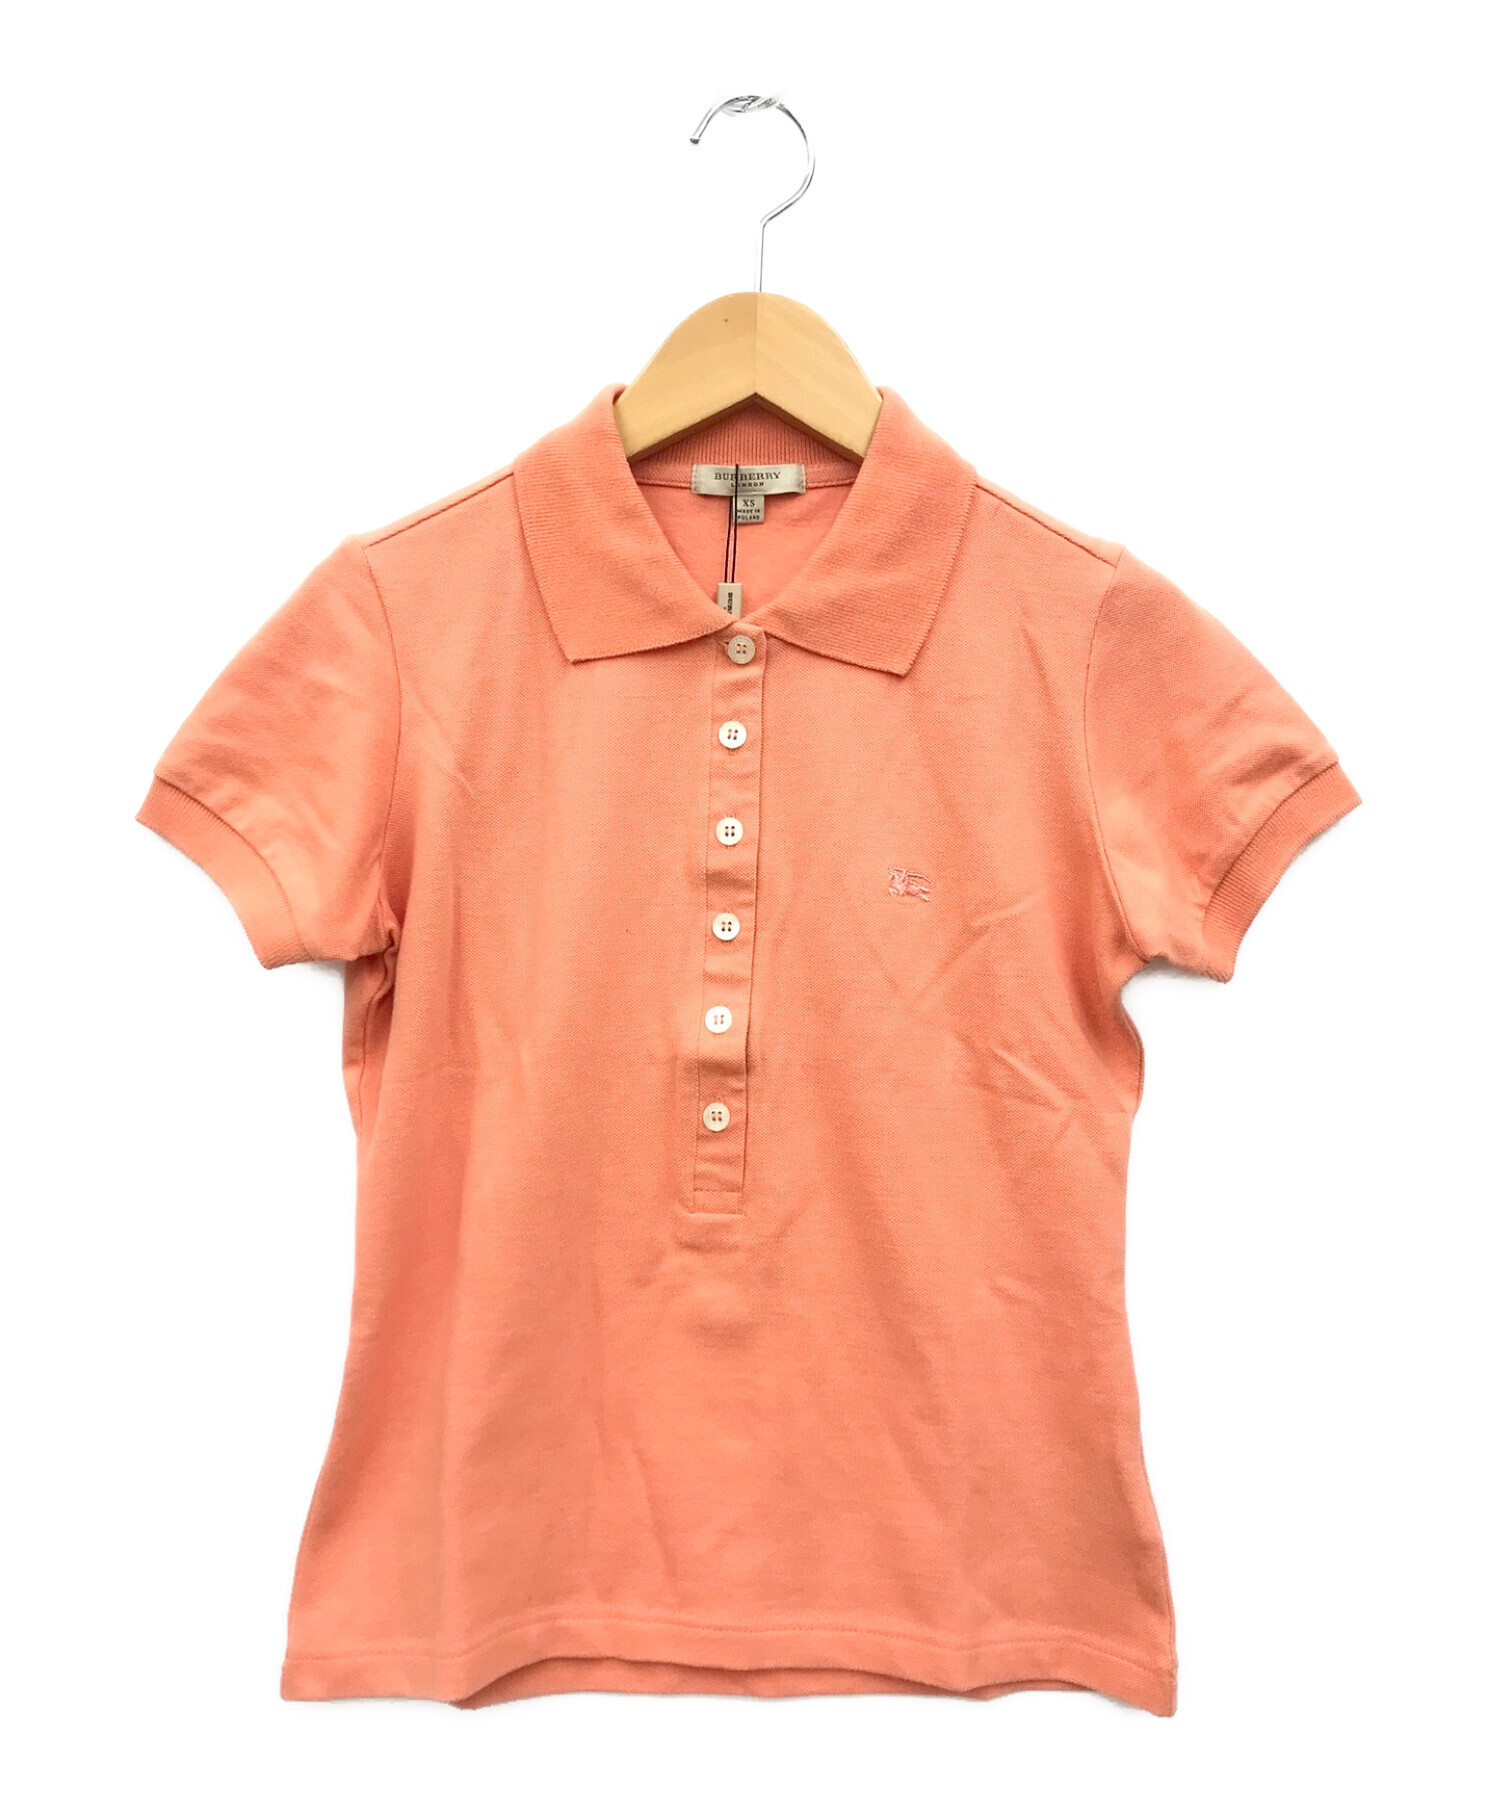 BURBERRY BRIT (バーバリーブリット) 半袖ポロシャツ オレンジ サイズ:XS